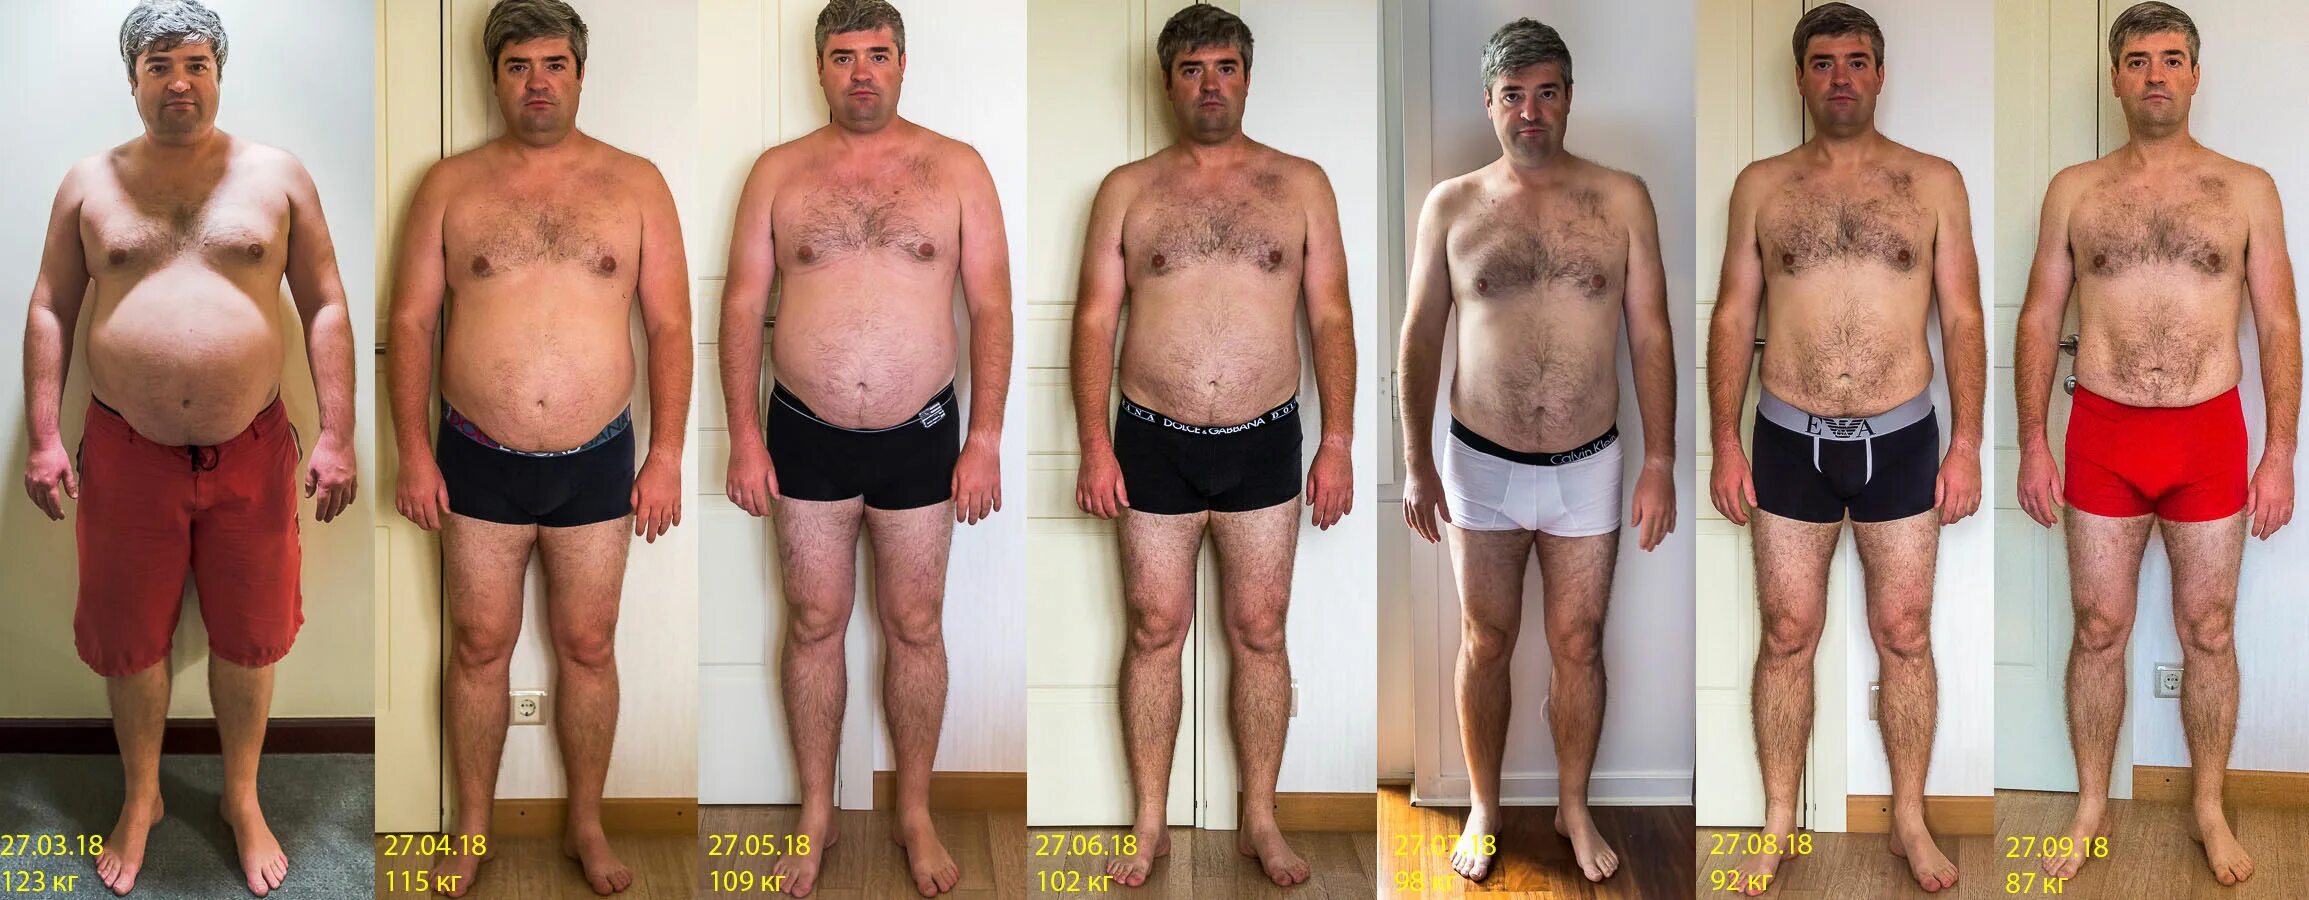 Man month. До и после похудения мужчины. Похудела до и после. Мужское похудение до и после.